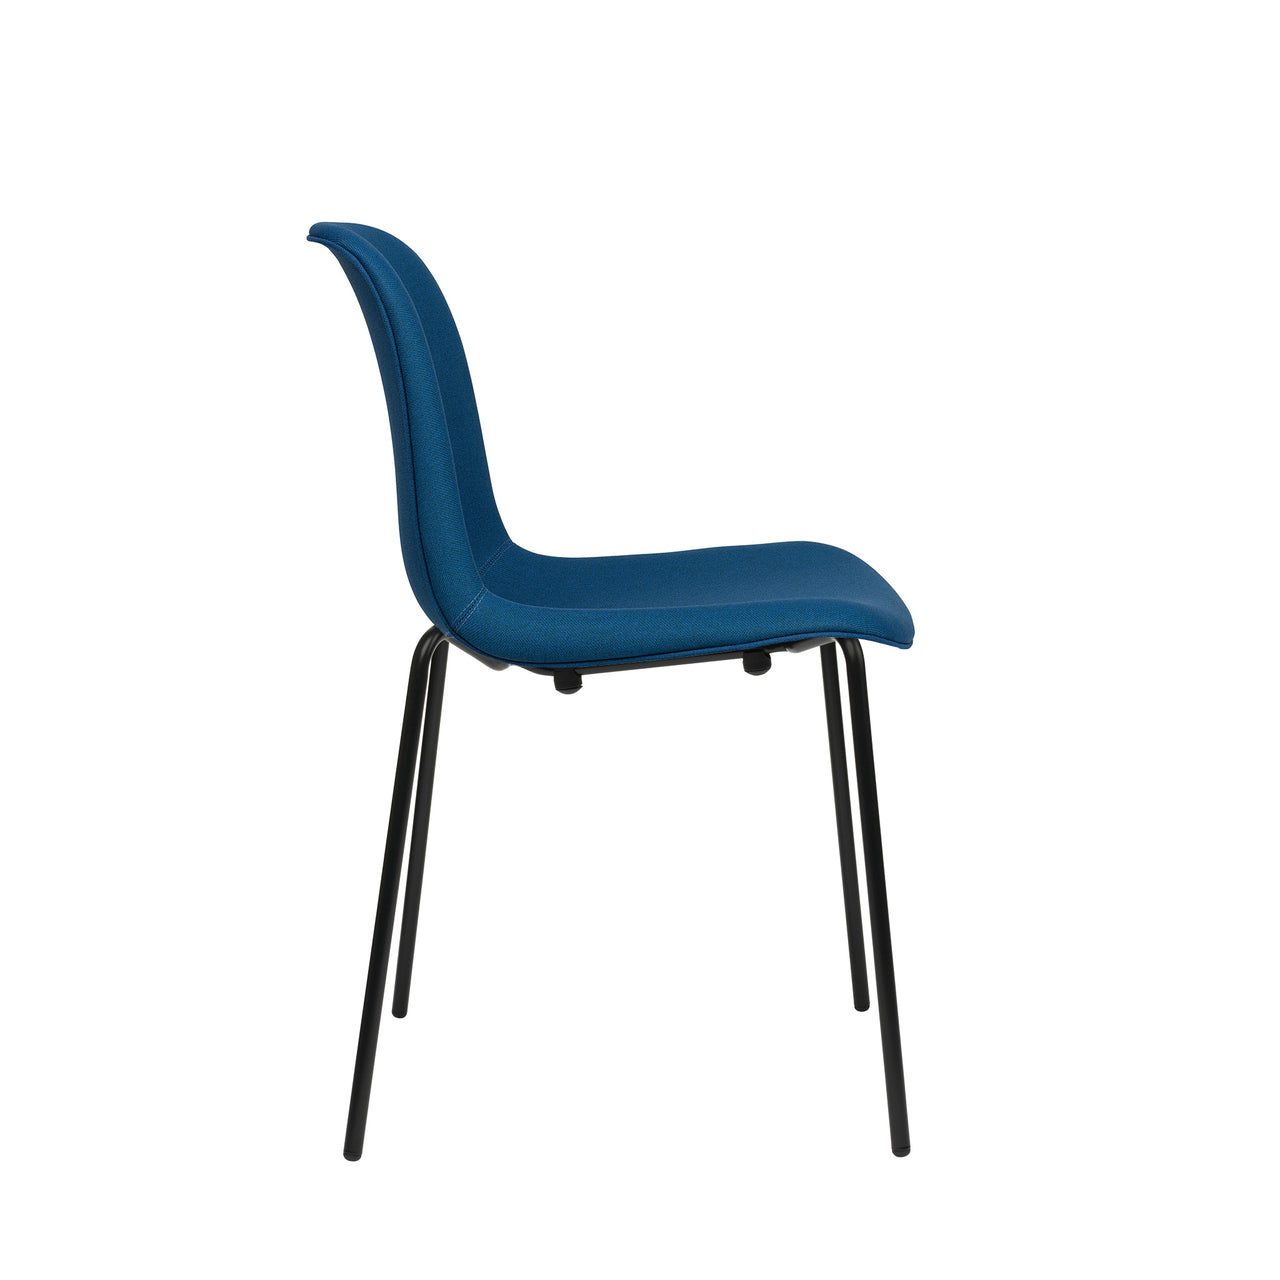 Murray Side Chairs, 4-Leg Base, Set of 2 (Blue Fabric)